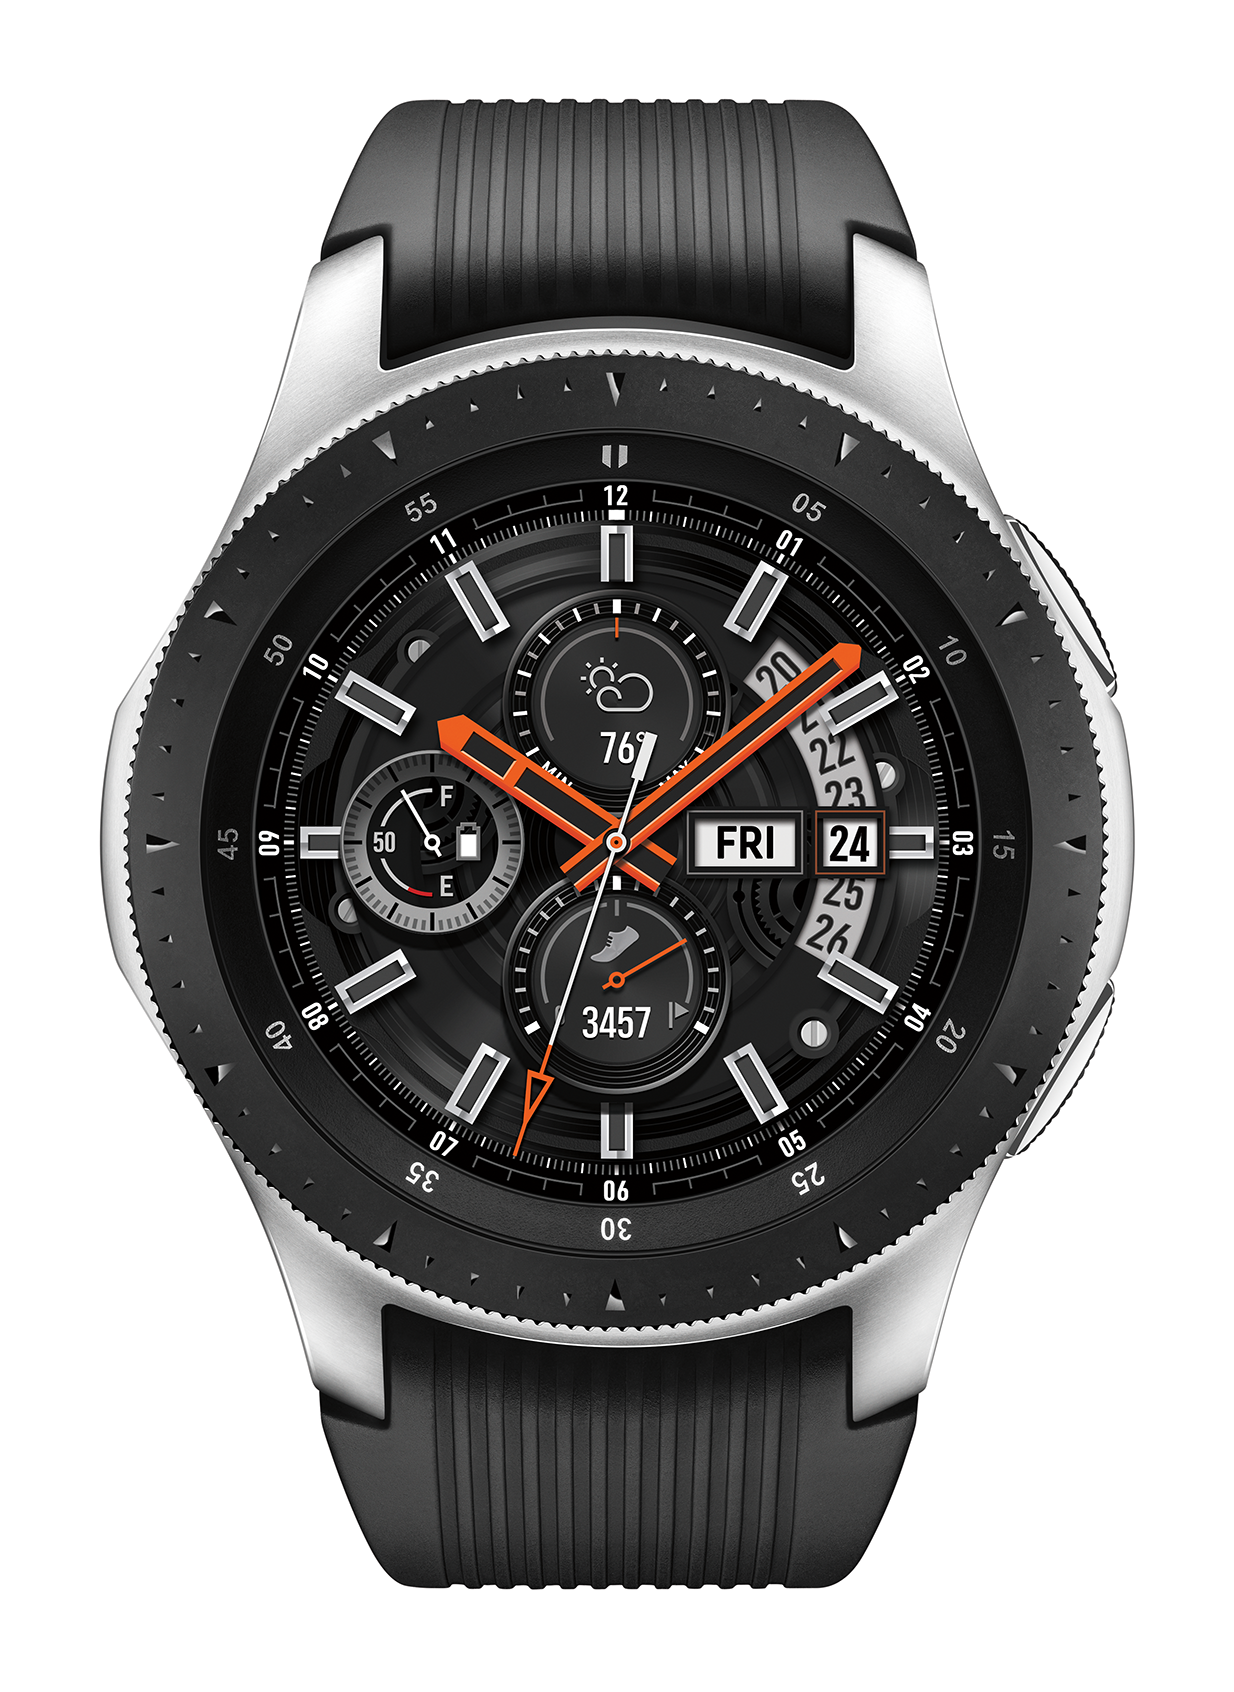 SAMSUNG Galaxy Watch - Bluetooth Smart Watch (46mm) - Silver - SM-R800NZSAXAR - image 2 of 15